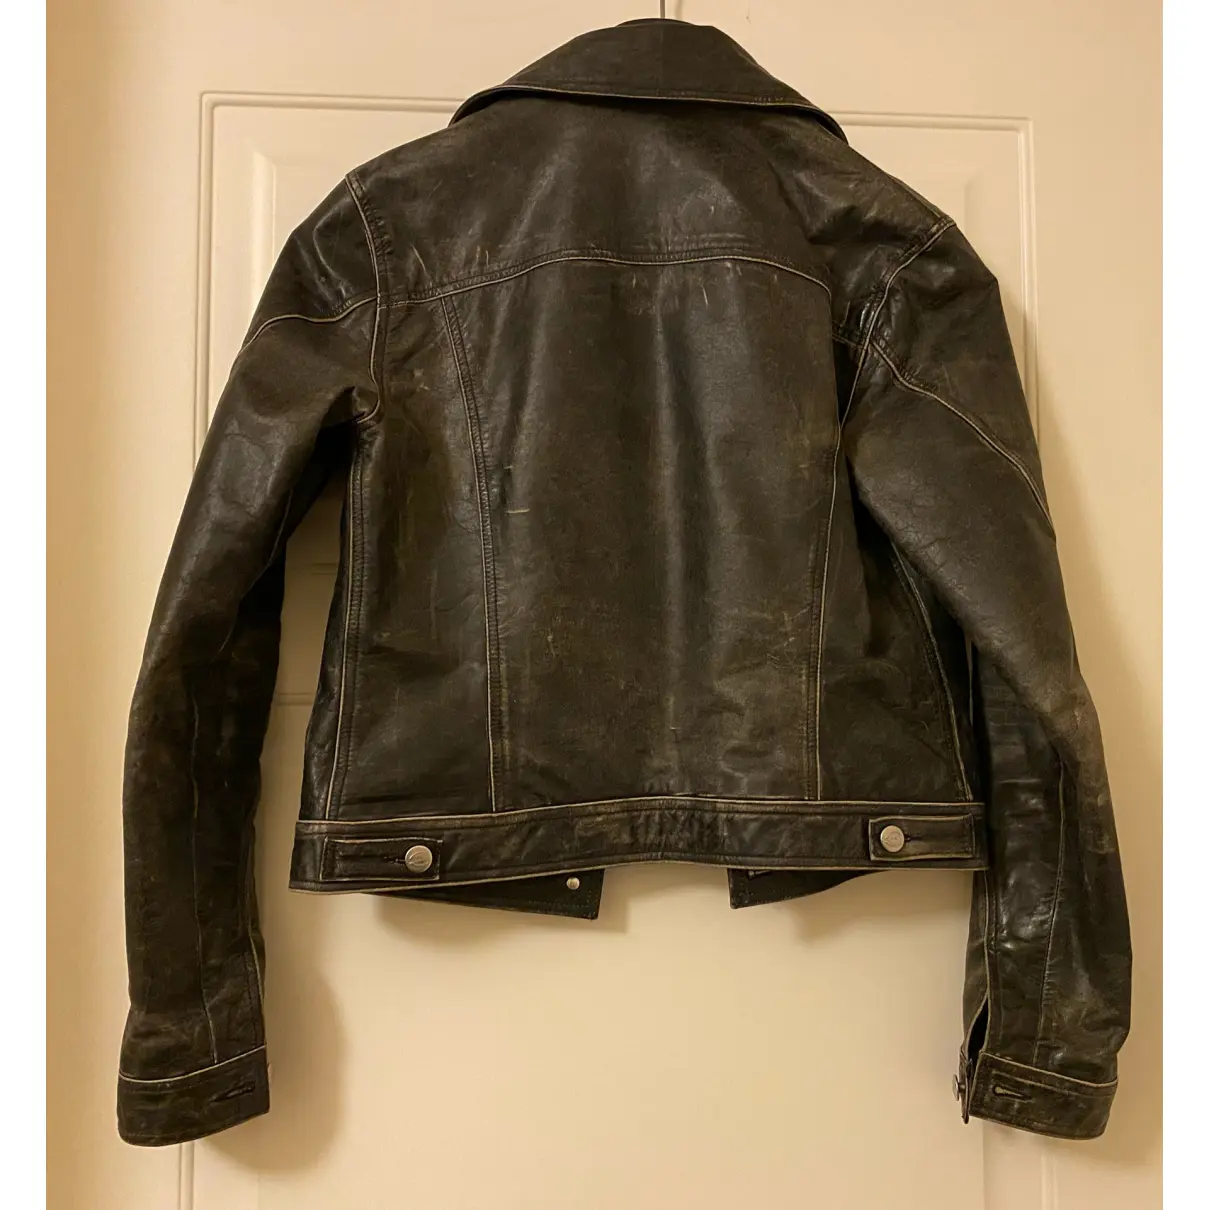 Buy Just Cavalli Leather biker jacket online